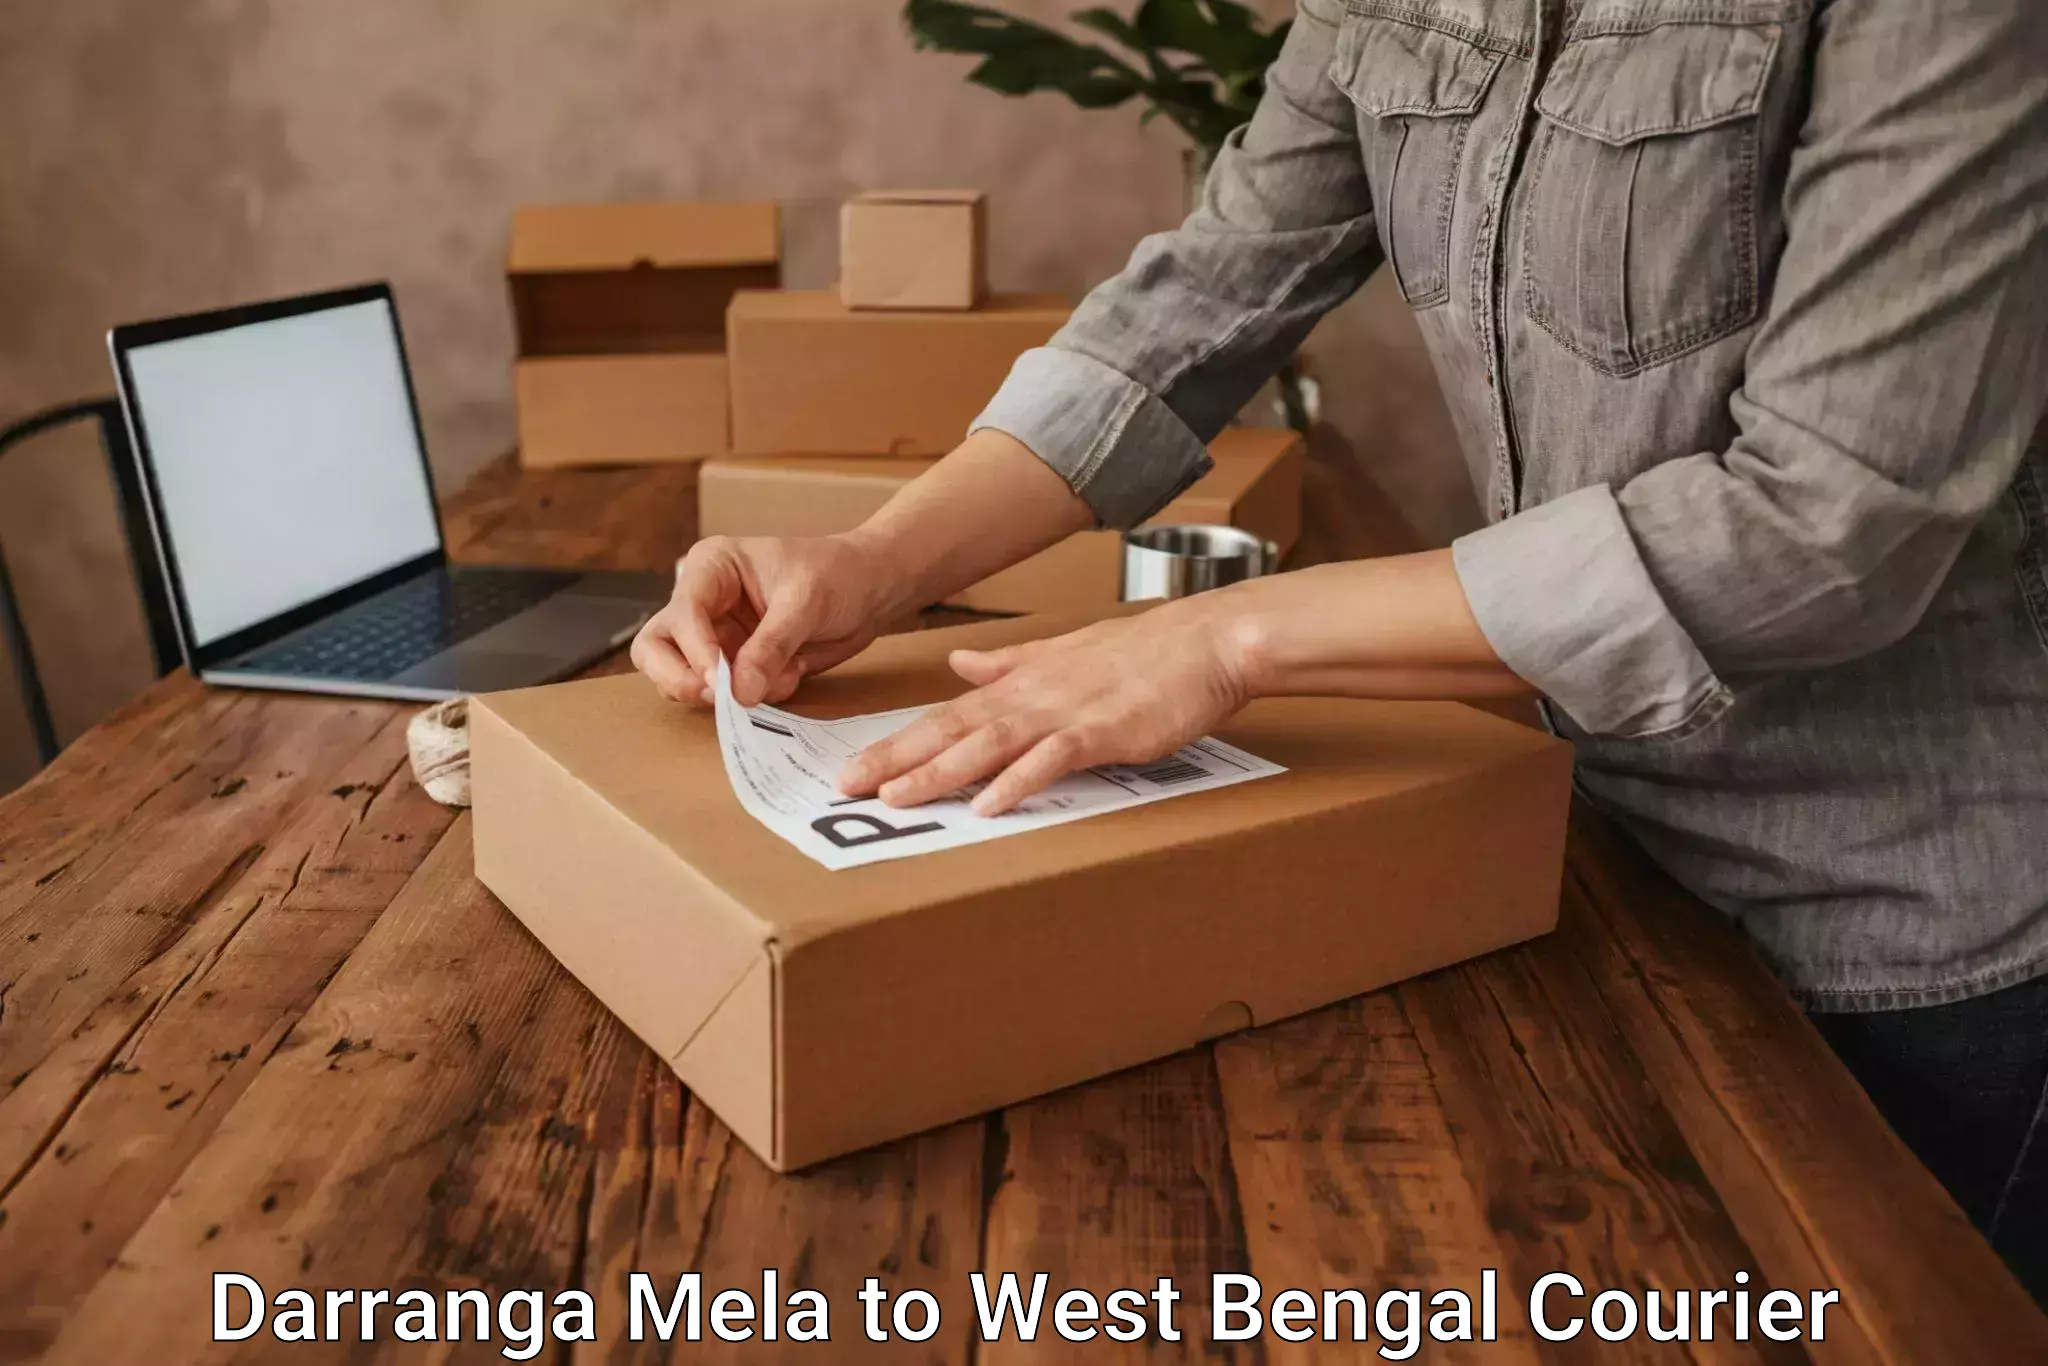 Multi-national courier services Darranga Mela to Chhatna